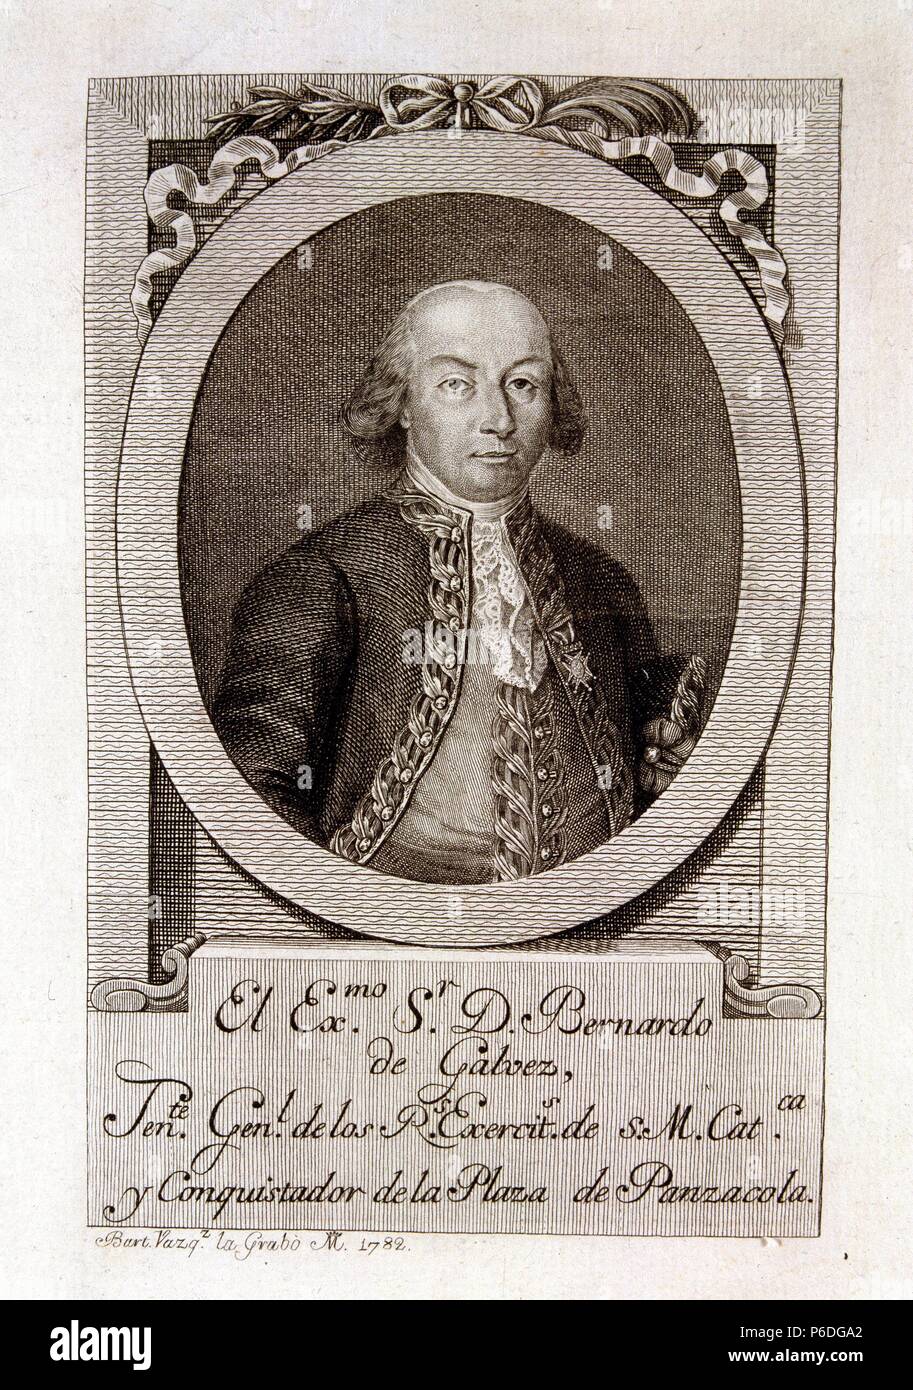 GALVEZ, BERNARDO. MILITAR ESPAÑOL. MACHARAVIAYA 1746-1786. GRABADO. BIBLIOTECA NACIONAL. MADRID. Stock Photo